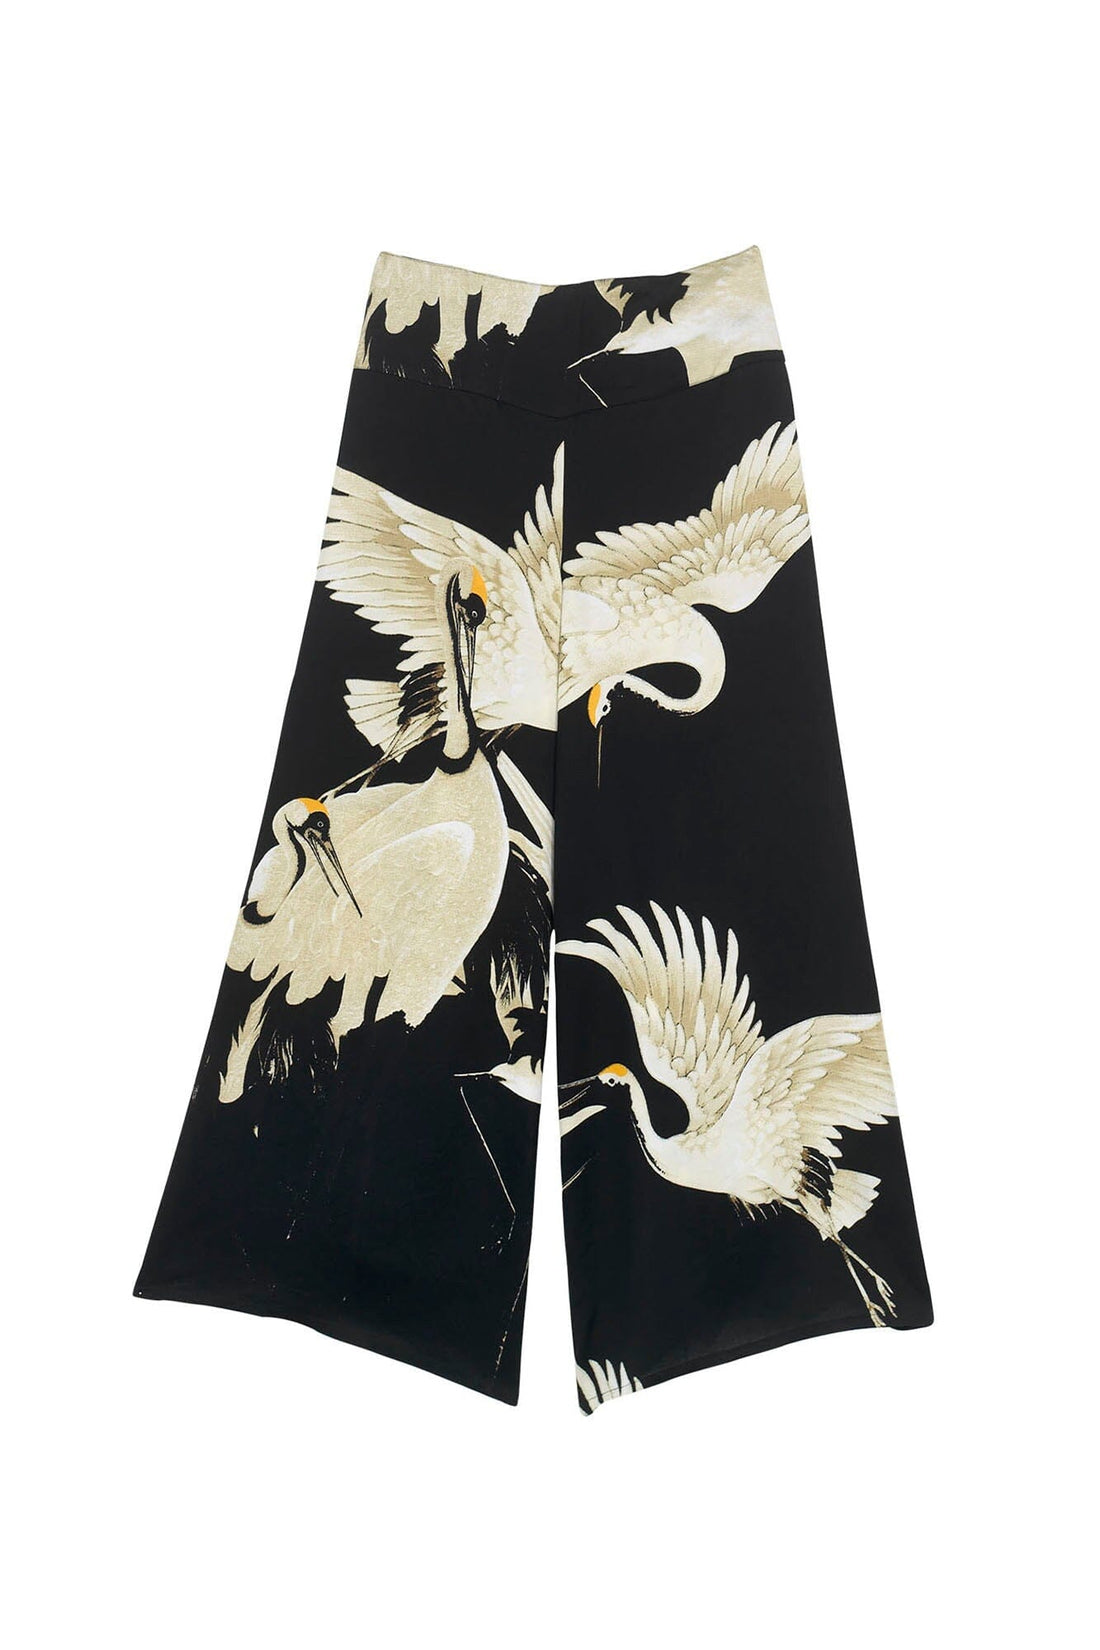 Satin Feel Palazzo Trousers in Black Stork Print by One Hundred Stars - PPASTOBLK Trousers One Hundred Stars